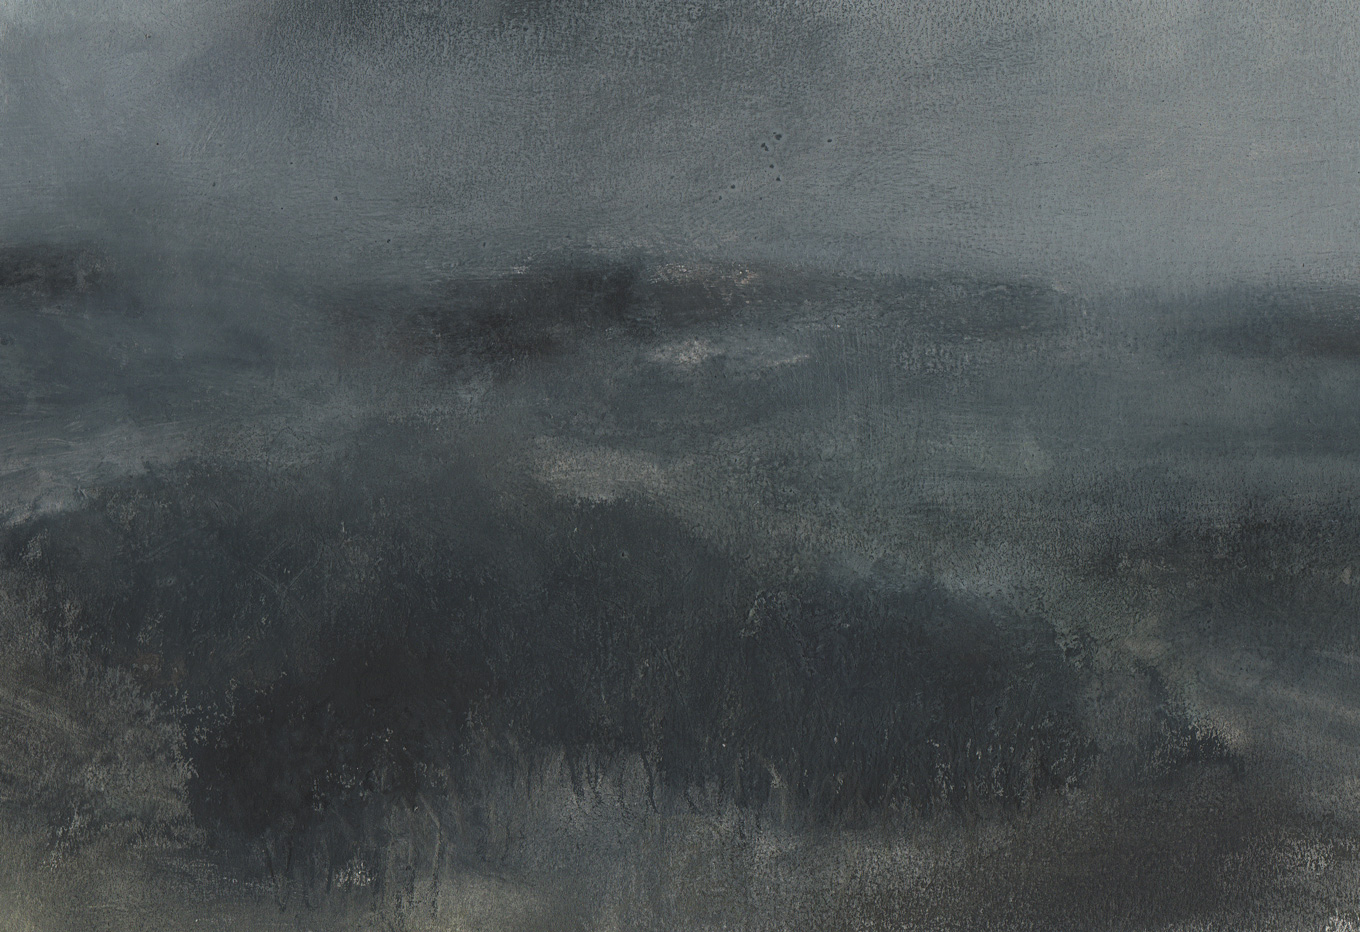 Nicholas Herbert, British Artist - Landscape L940, Sharpenhoe Series, The Chiltern Hills, contemporary mixed media painting